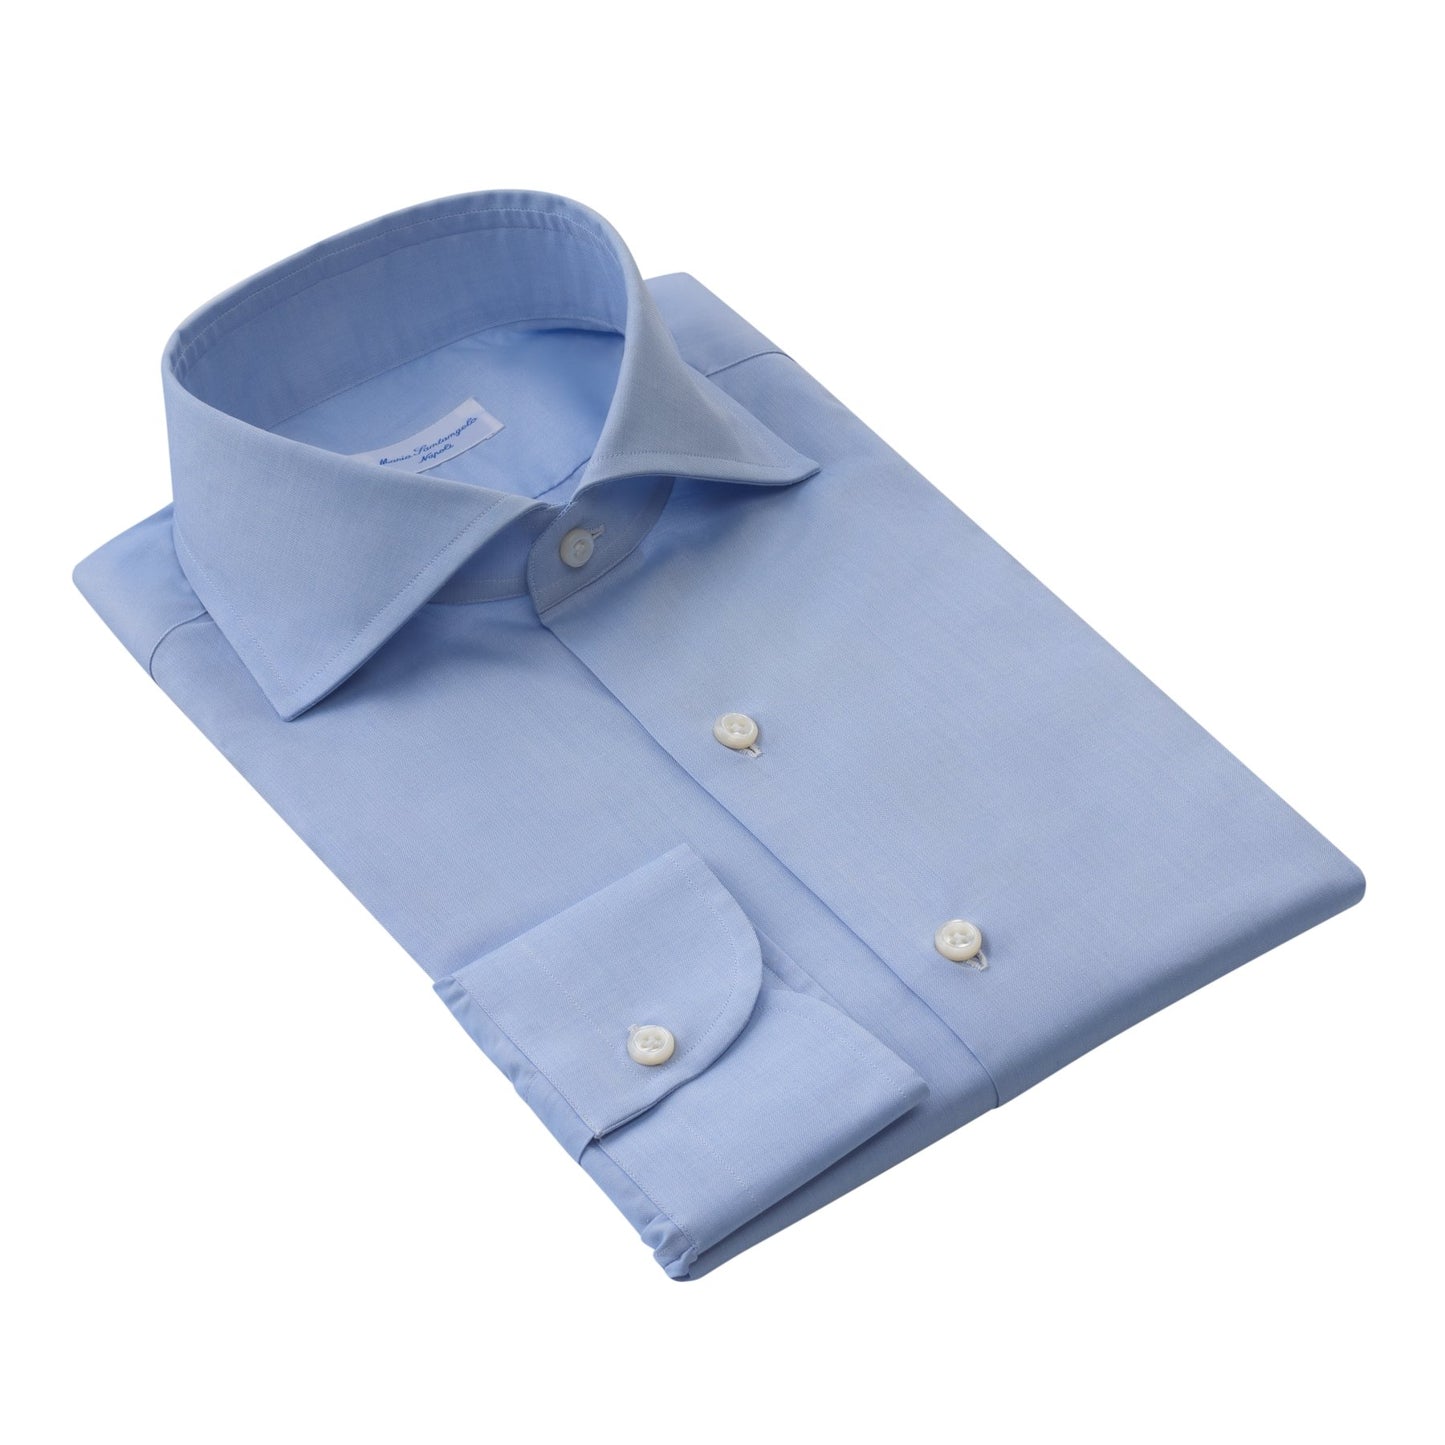 Maria Santangelo Classic Cotton Dress Shirt in Light Blue - SARTALE